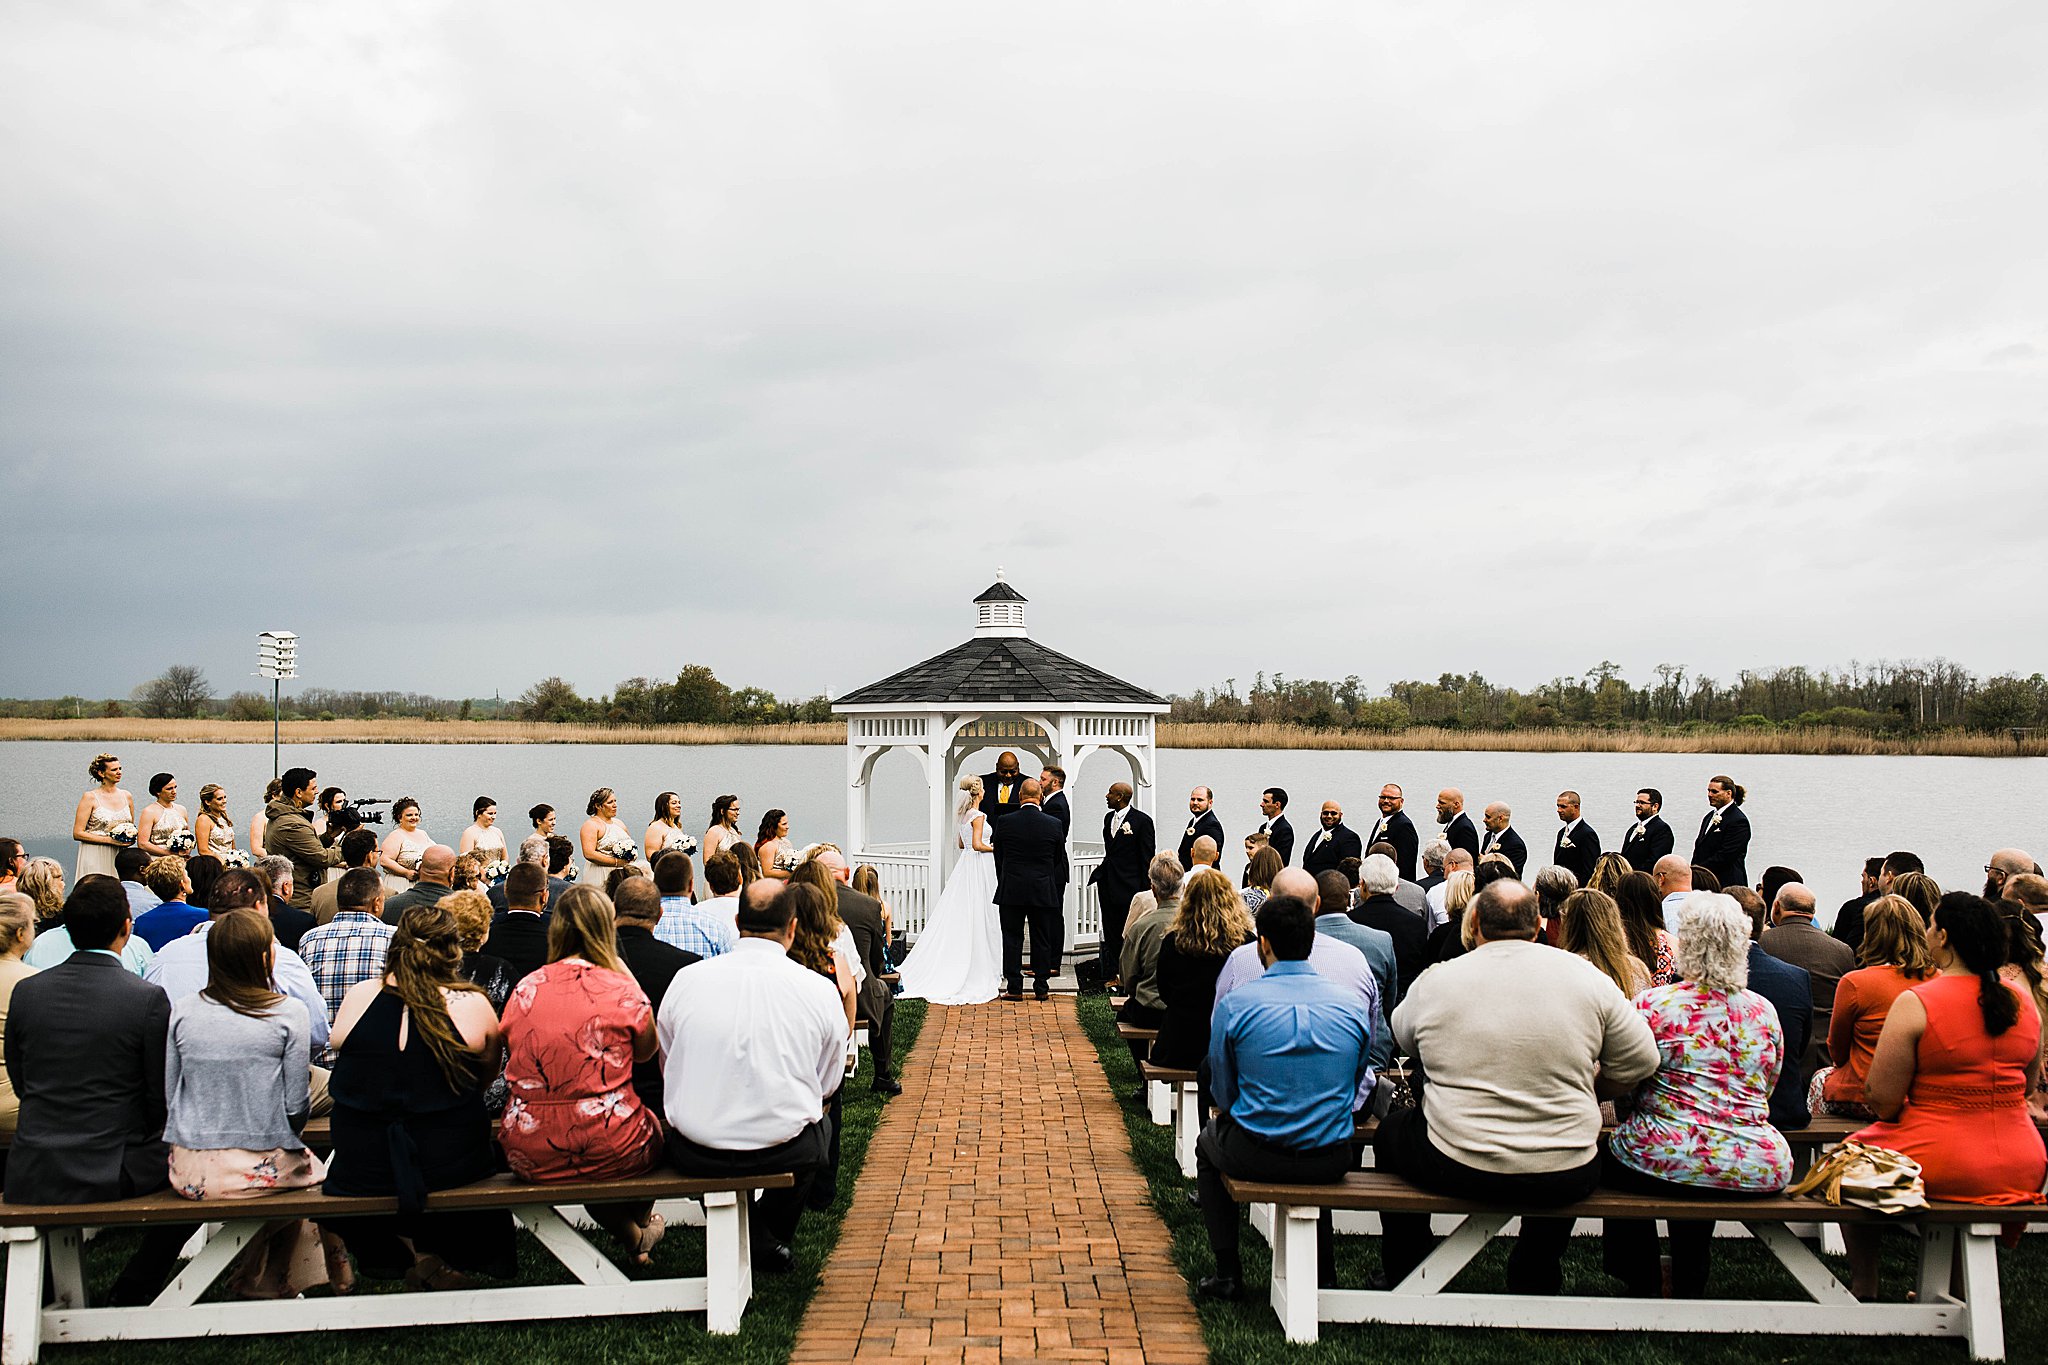 thousand acre farm wedding